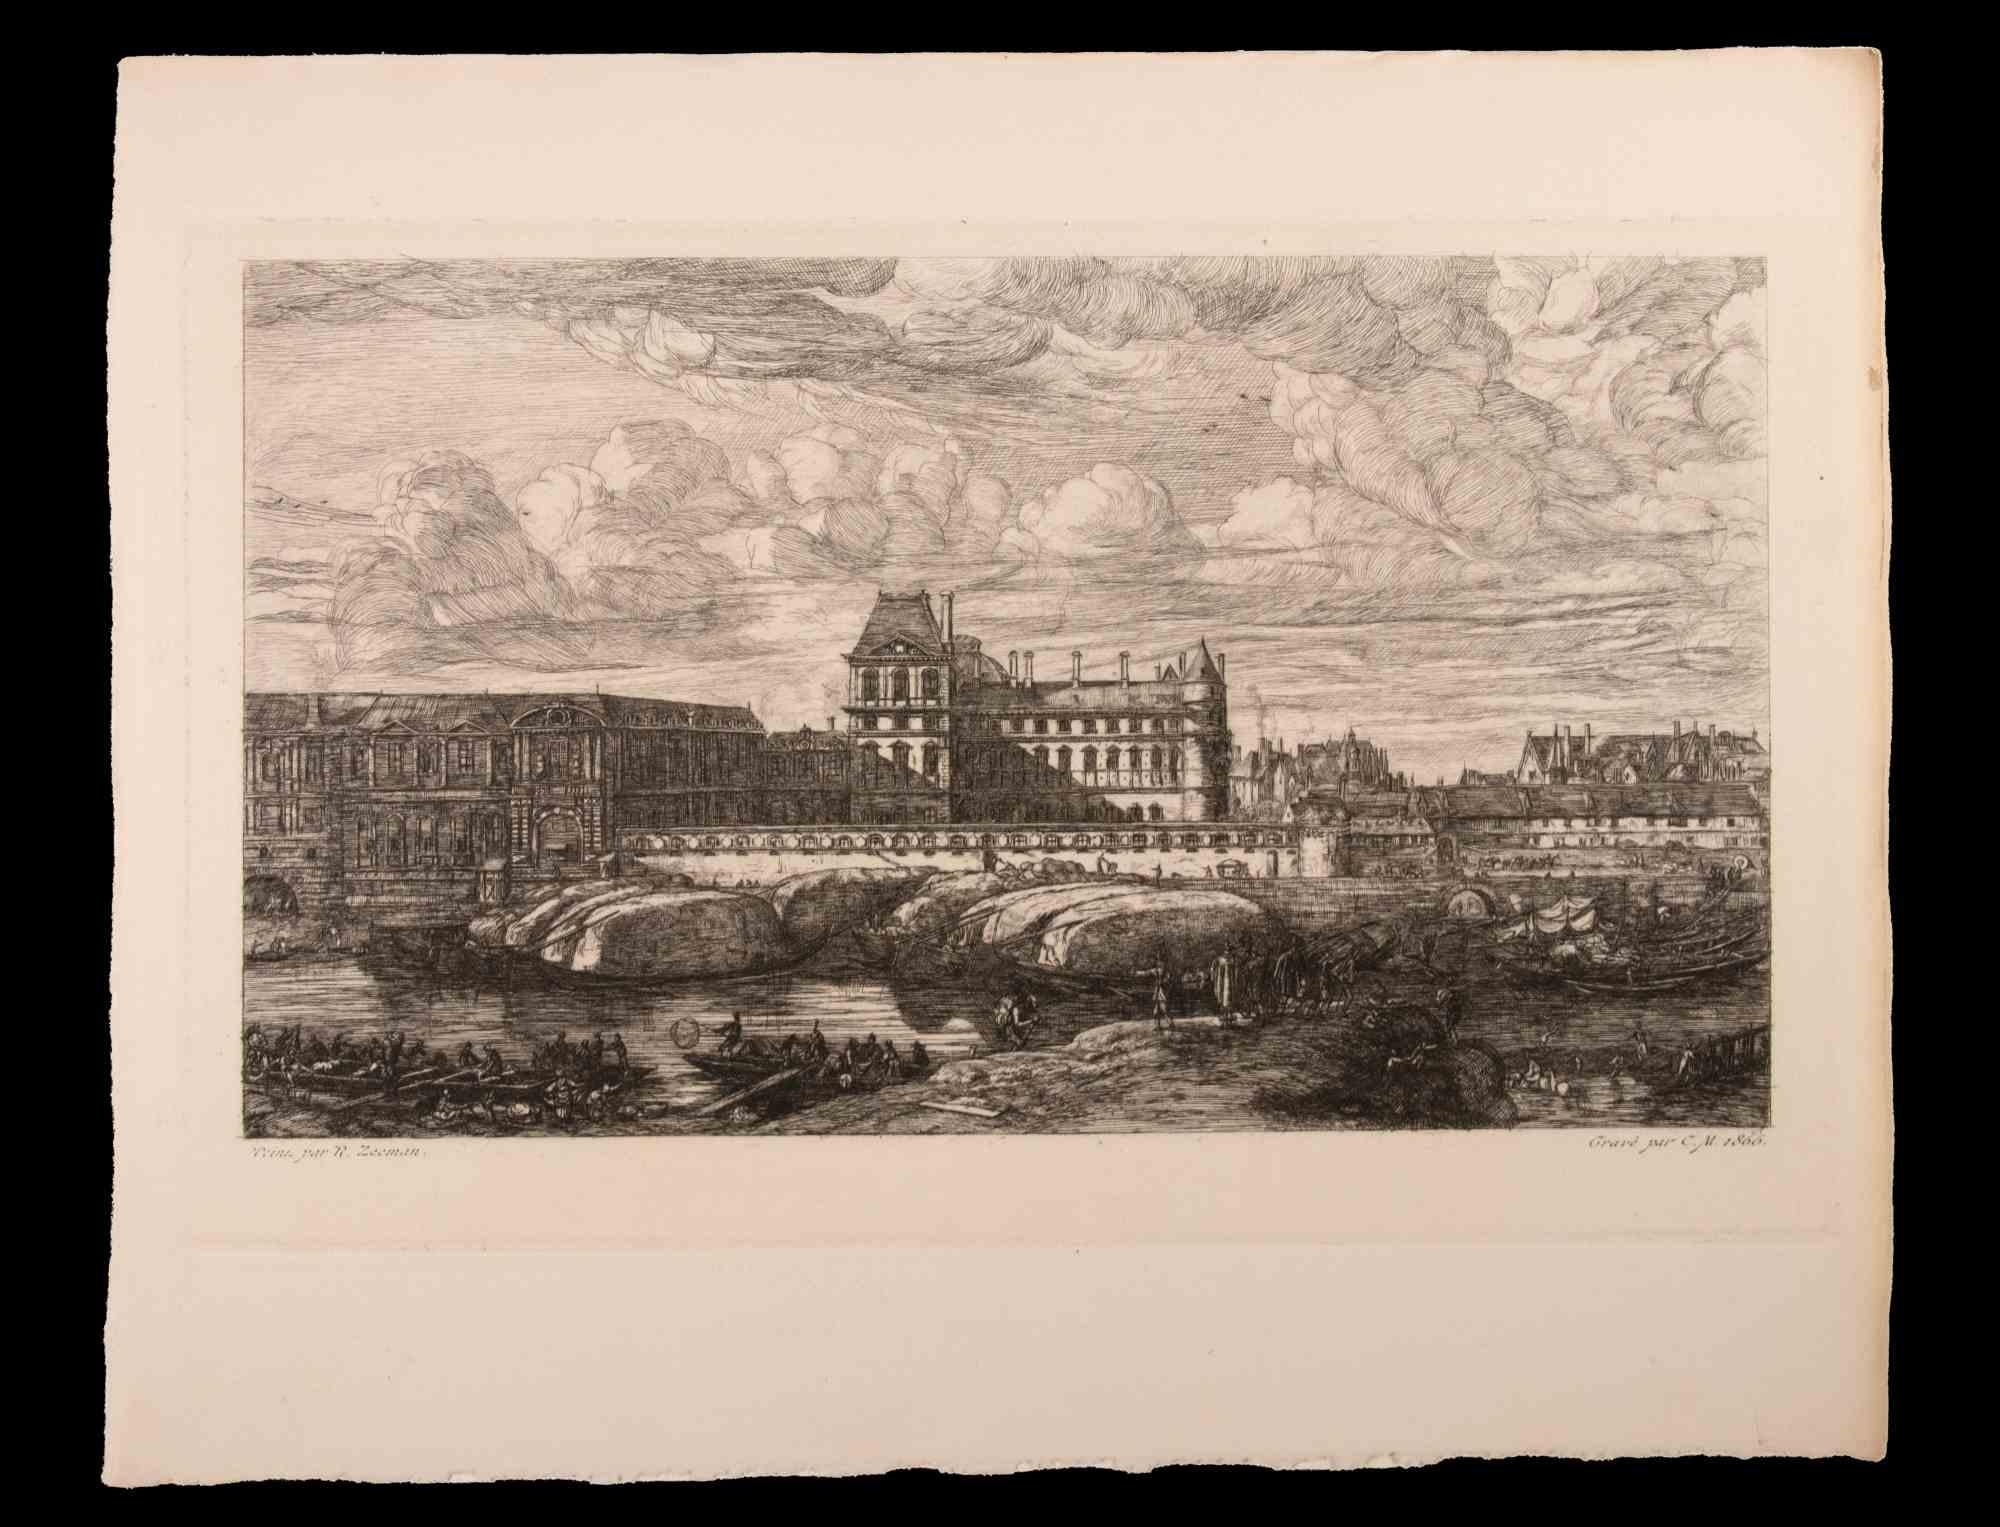 Charles Meryon Landscape Print - City Landscape - Original Etching by C. Meryon - 1866